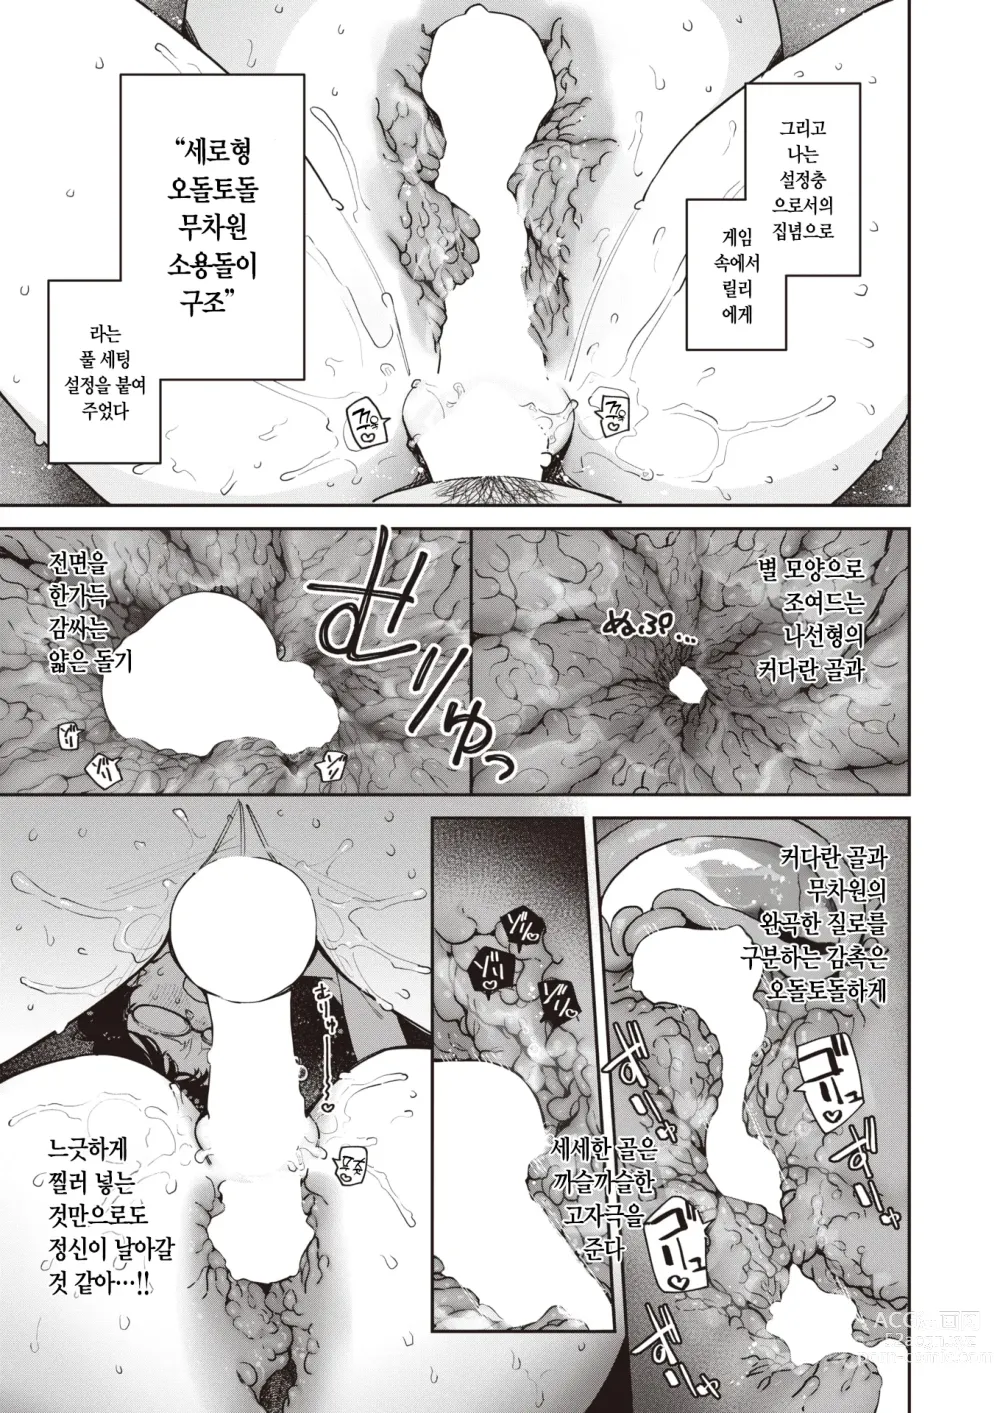 Page 6 of manga 오나홀·메이커 중편